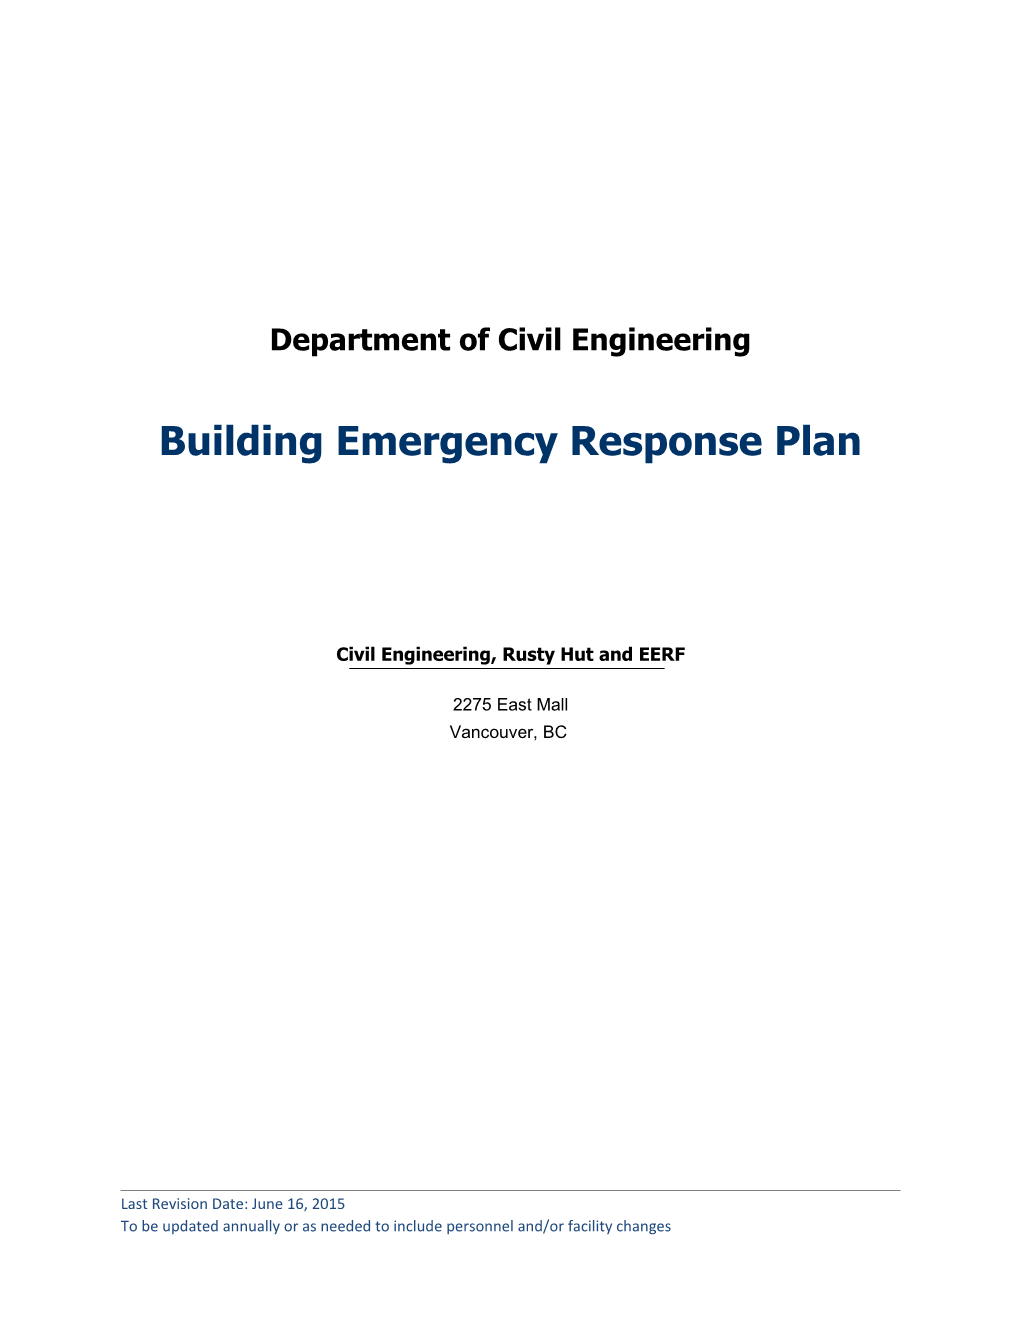 Building Emergency Response Plan